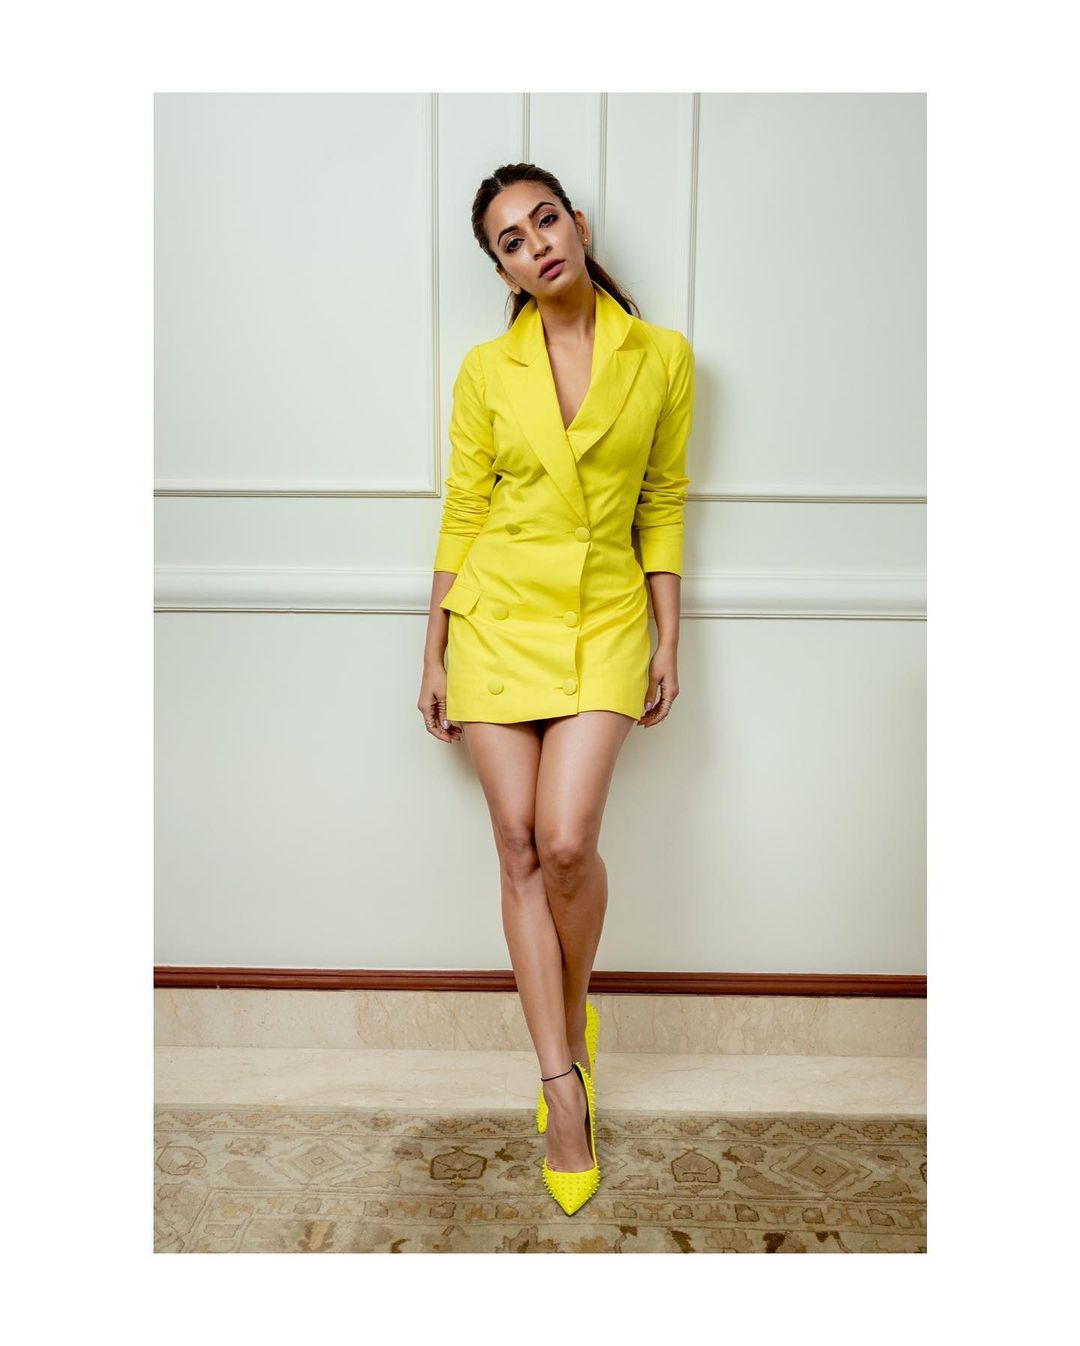 Kriti Kharbanda keeps it fashionable in the yellow blazer dress with matching shoes.